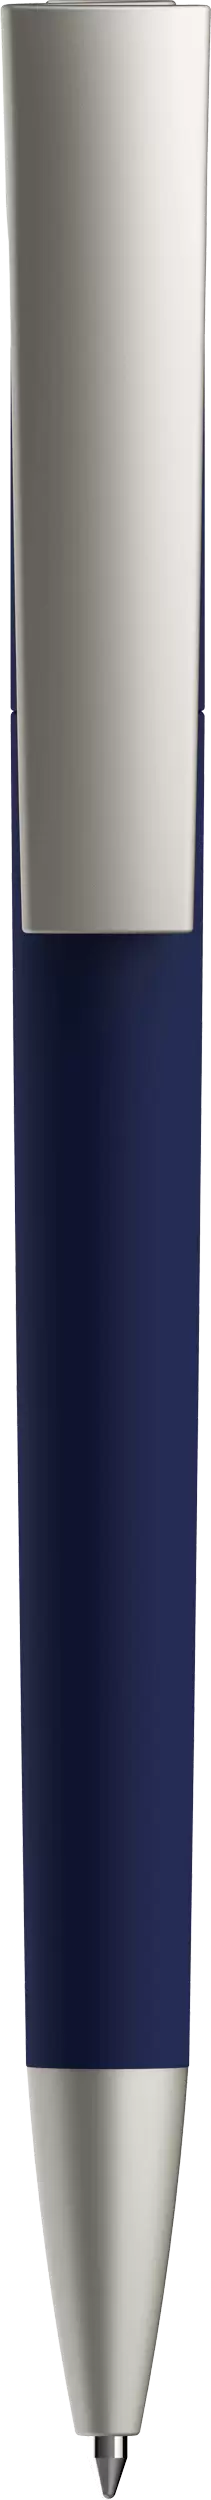 Ручка ZETA COLOR Темно-синяя 1015-14